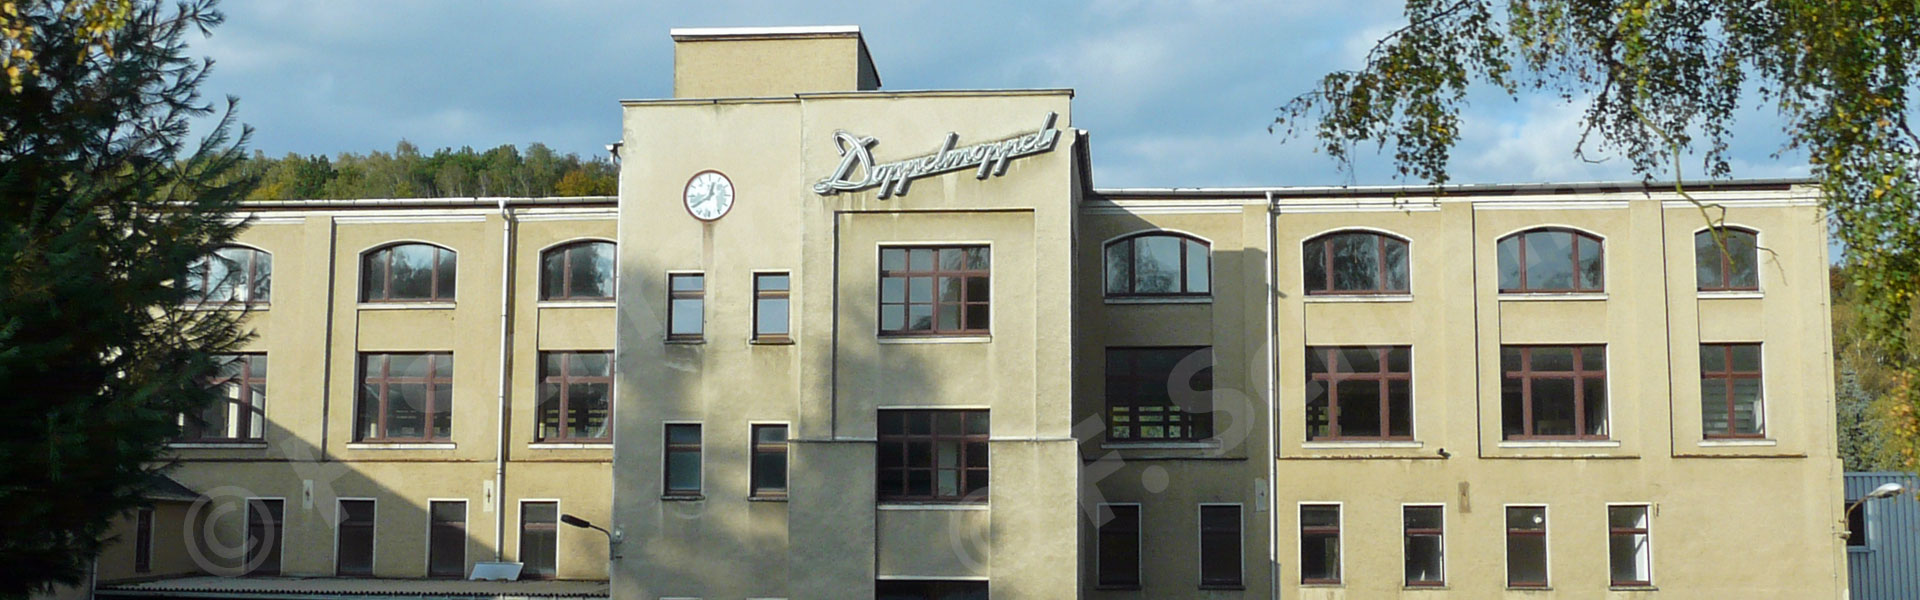 Fabrikgebäude Doppelmoppel Köthensdorf (2016)